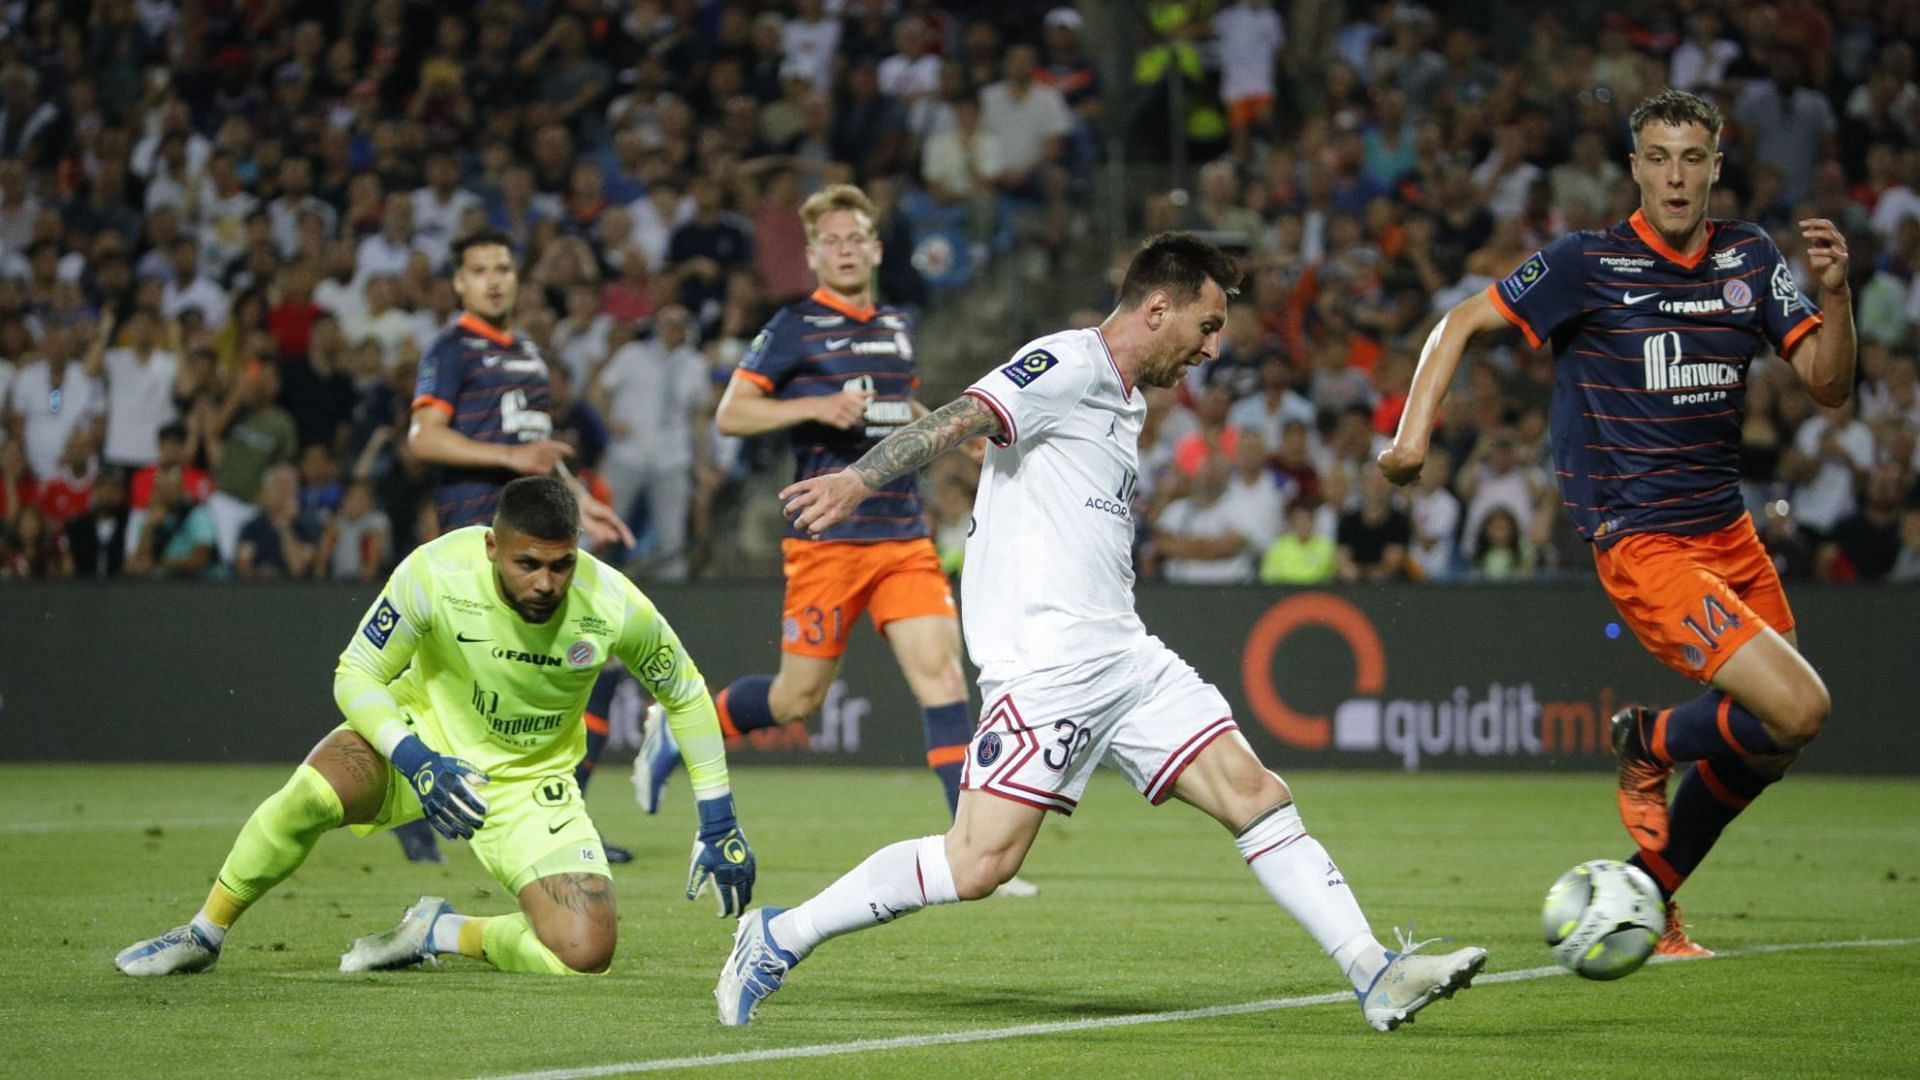 Lionel Messi scores to make it 2-0 for Paris Saint-Germain against Montpellier.